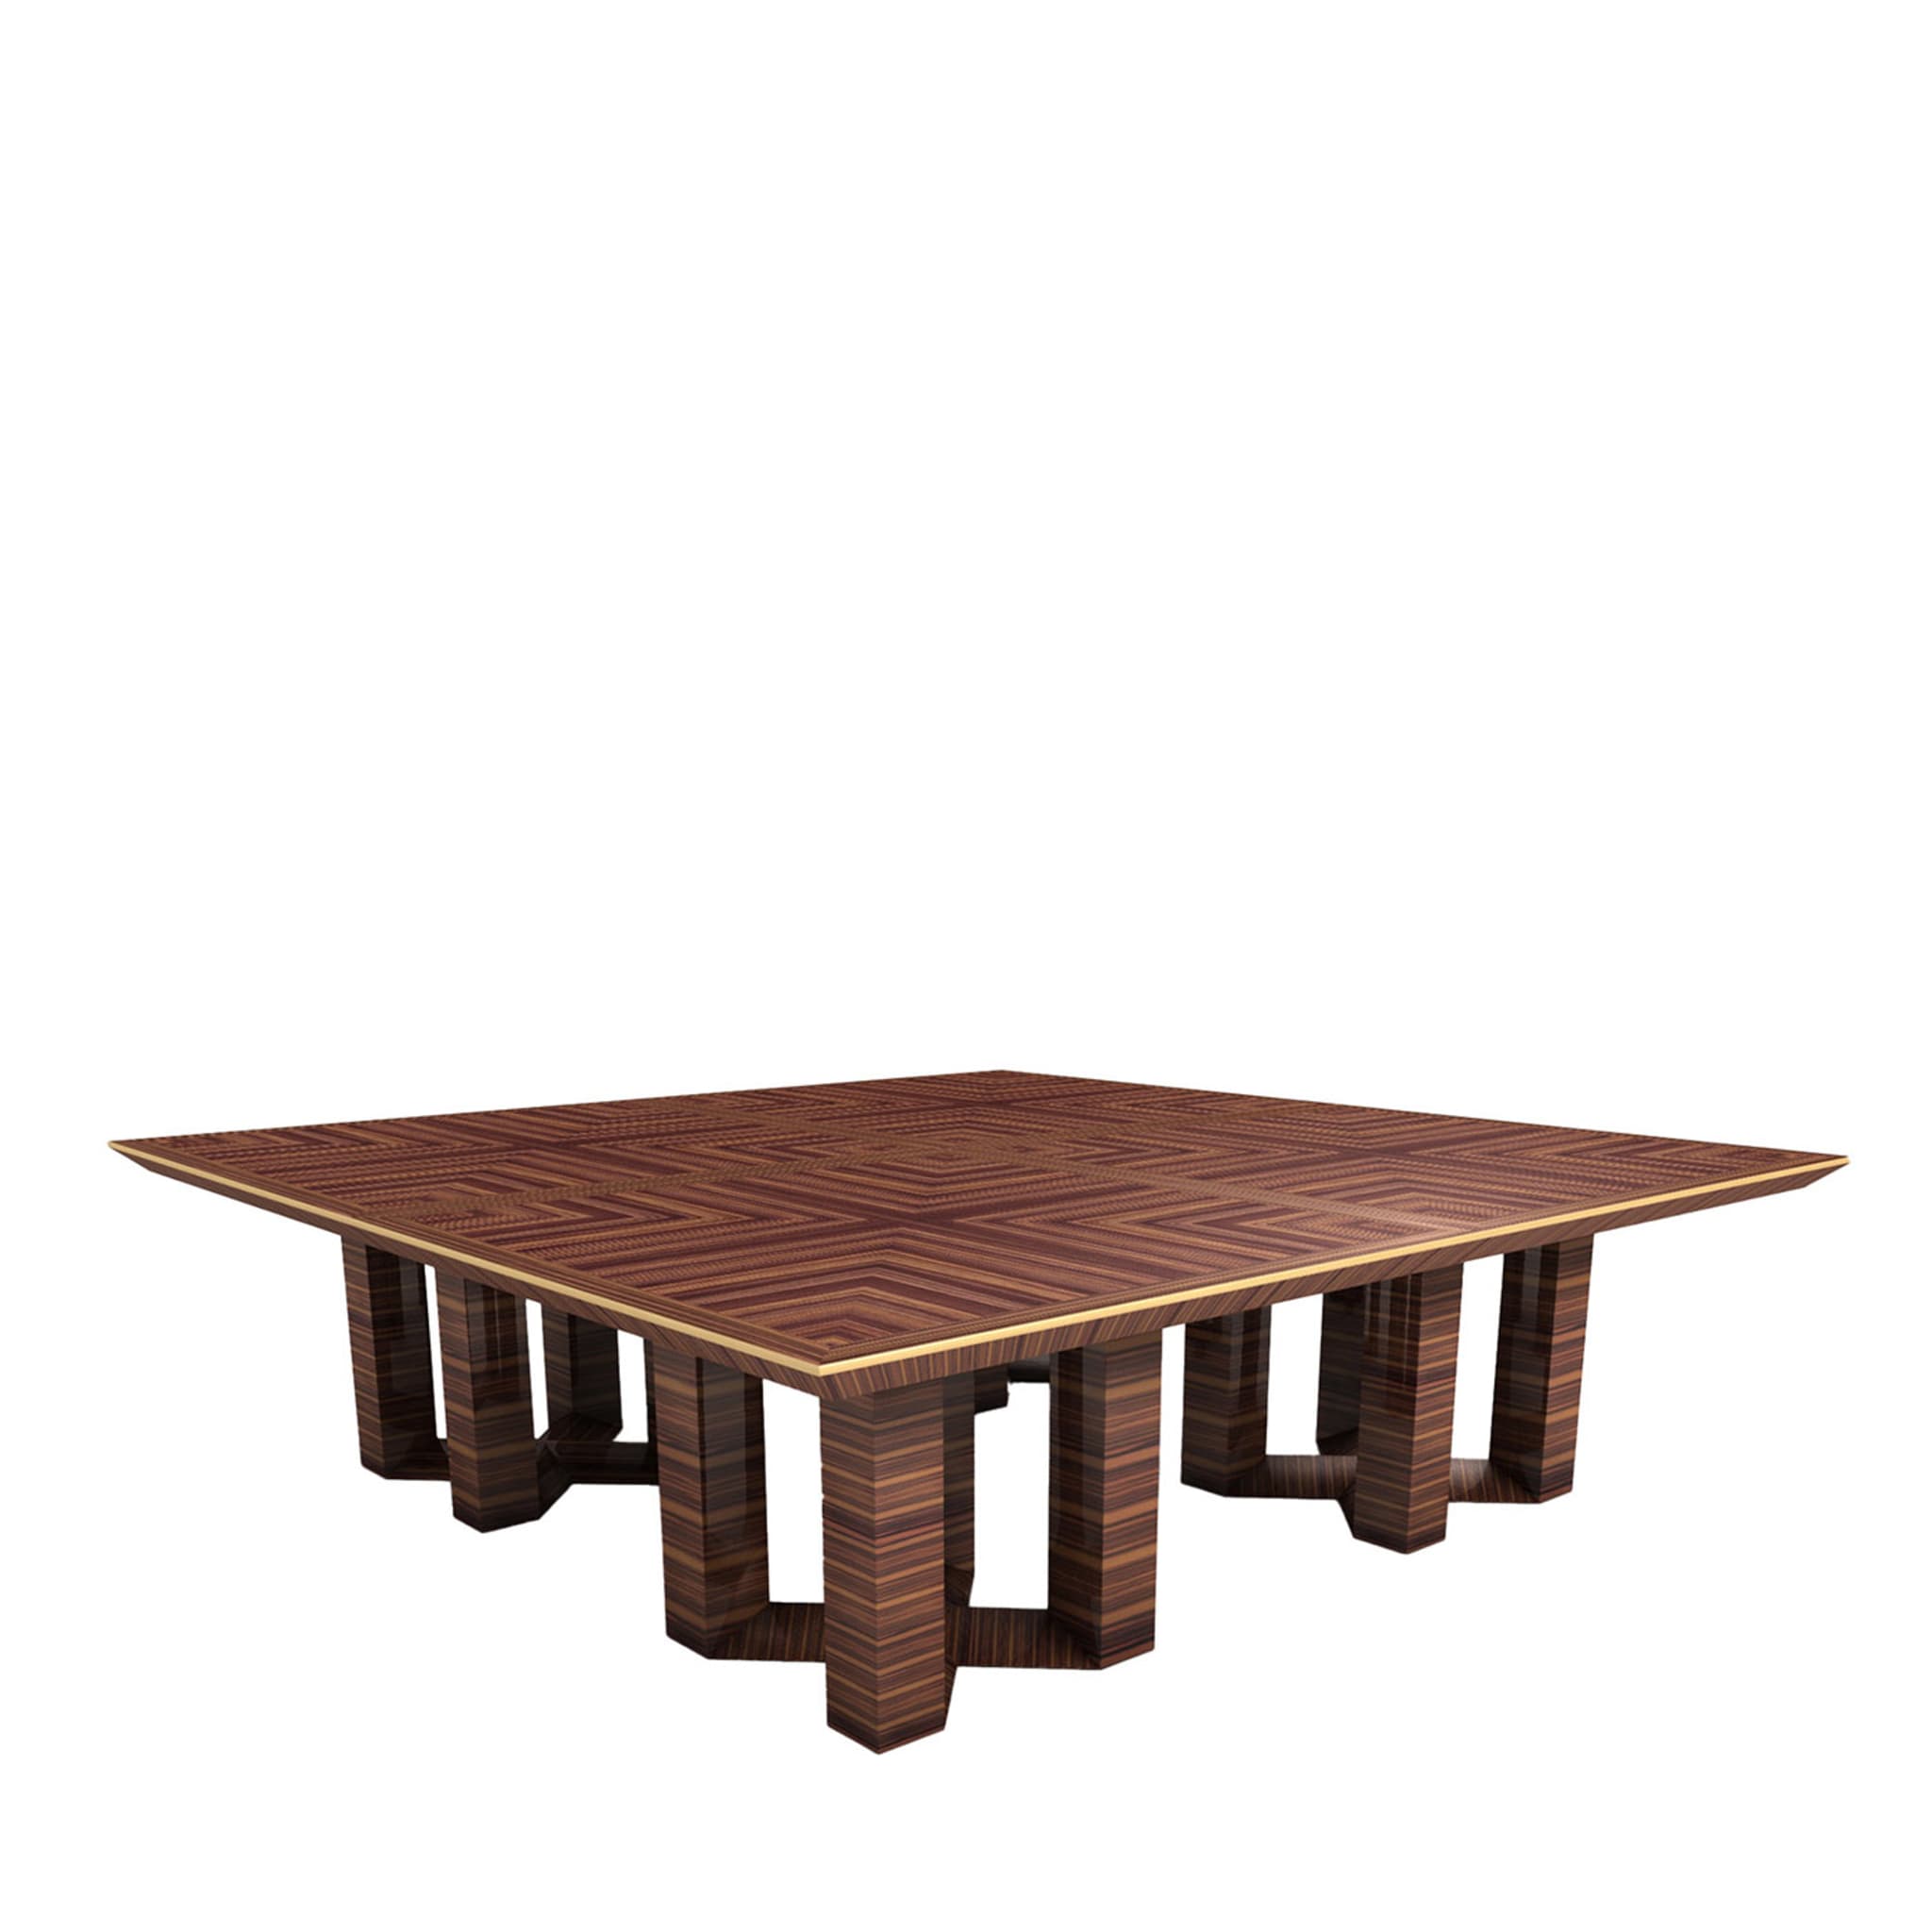 Ettore Large Square Table by Antonio Berdondini - Main view